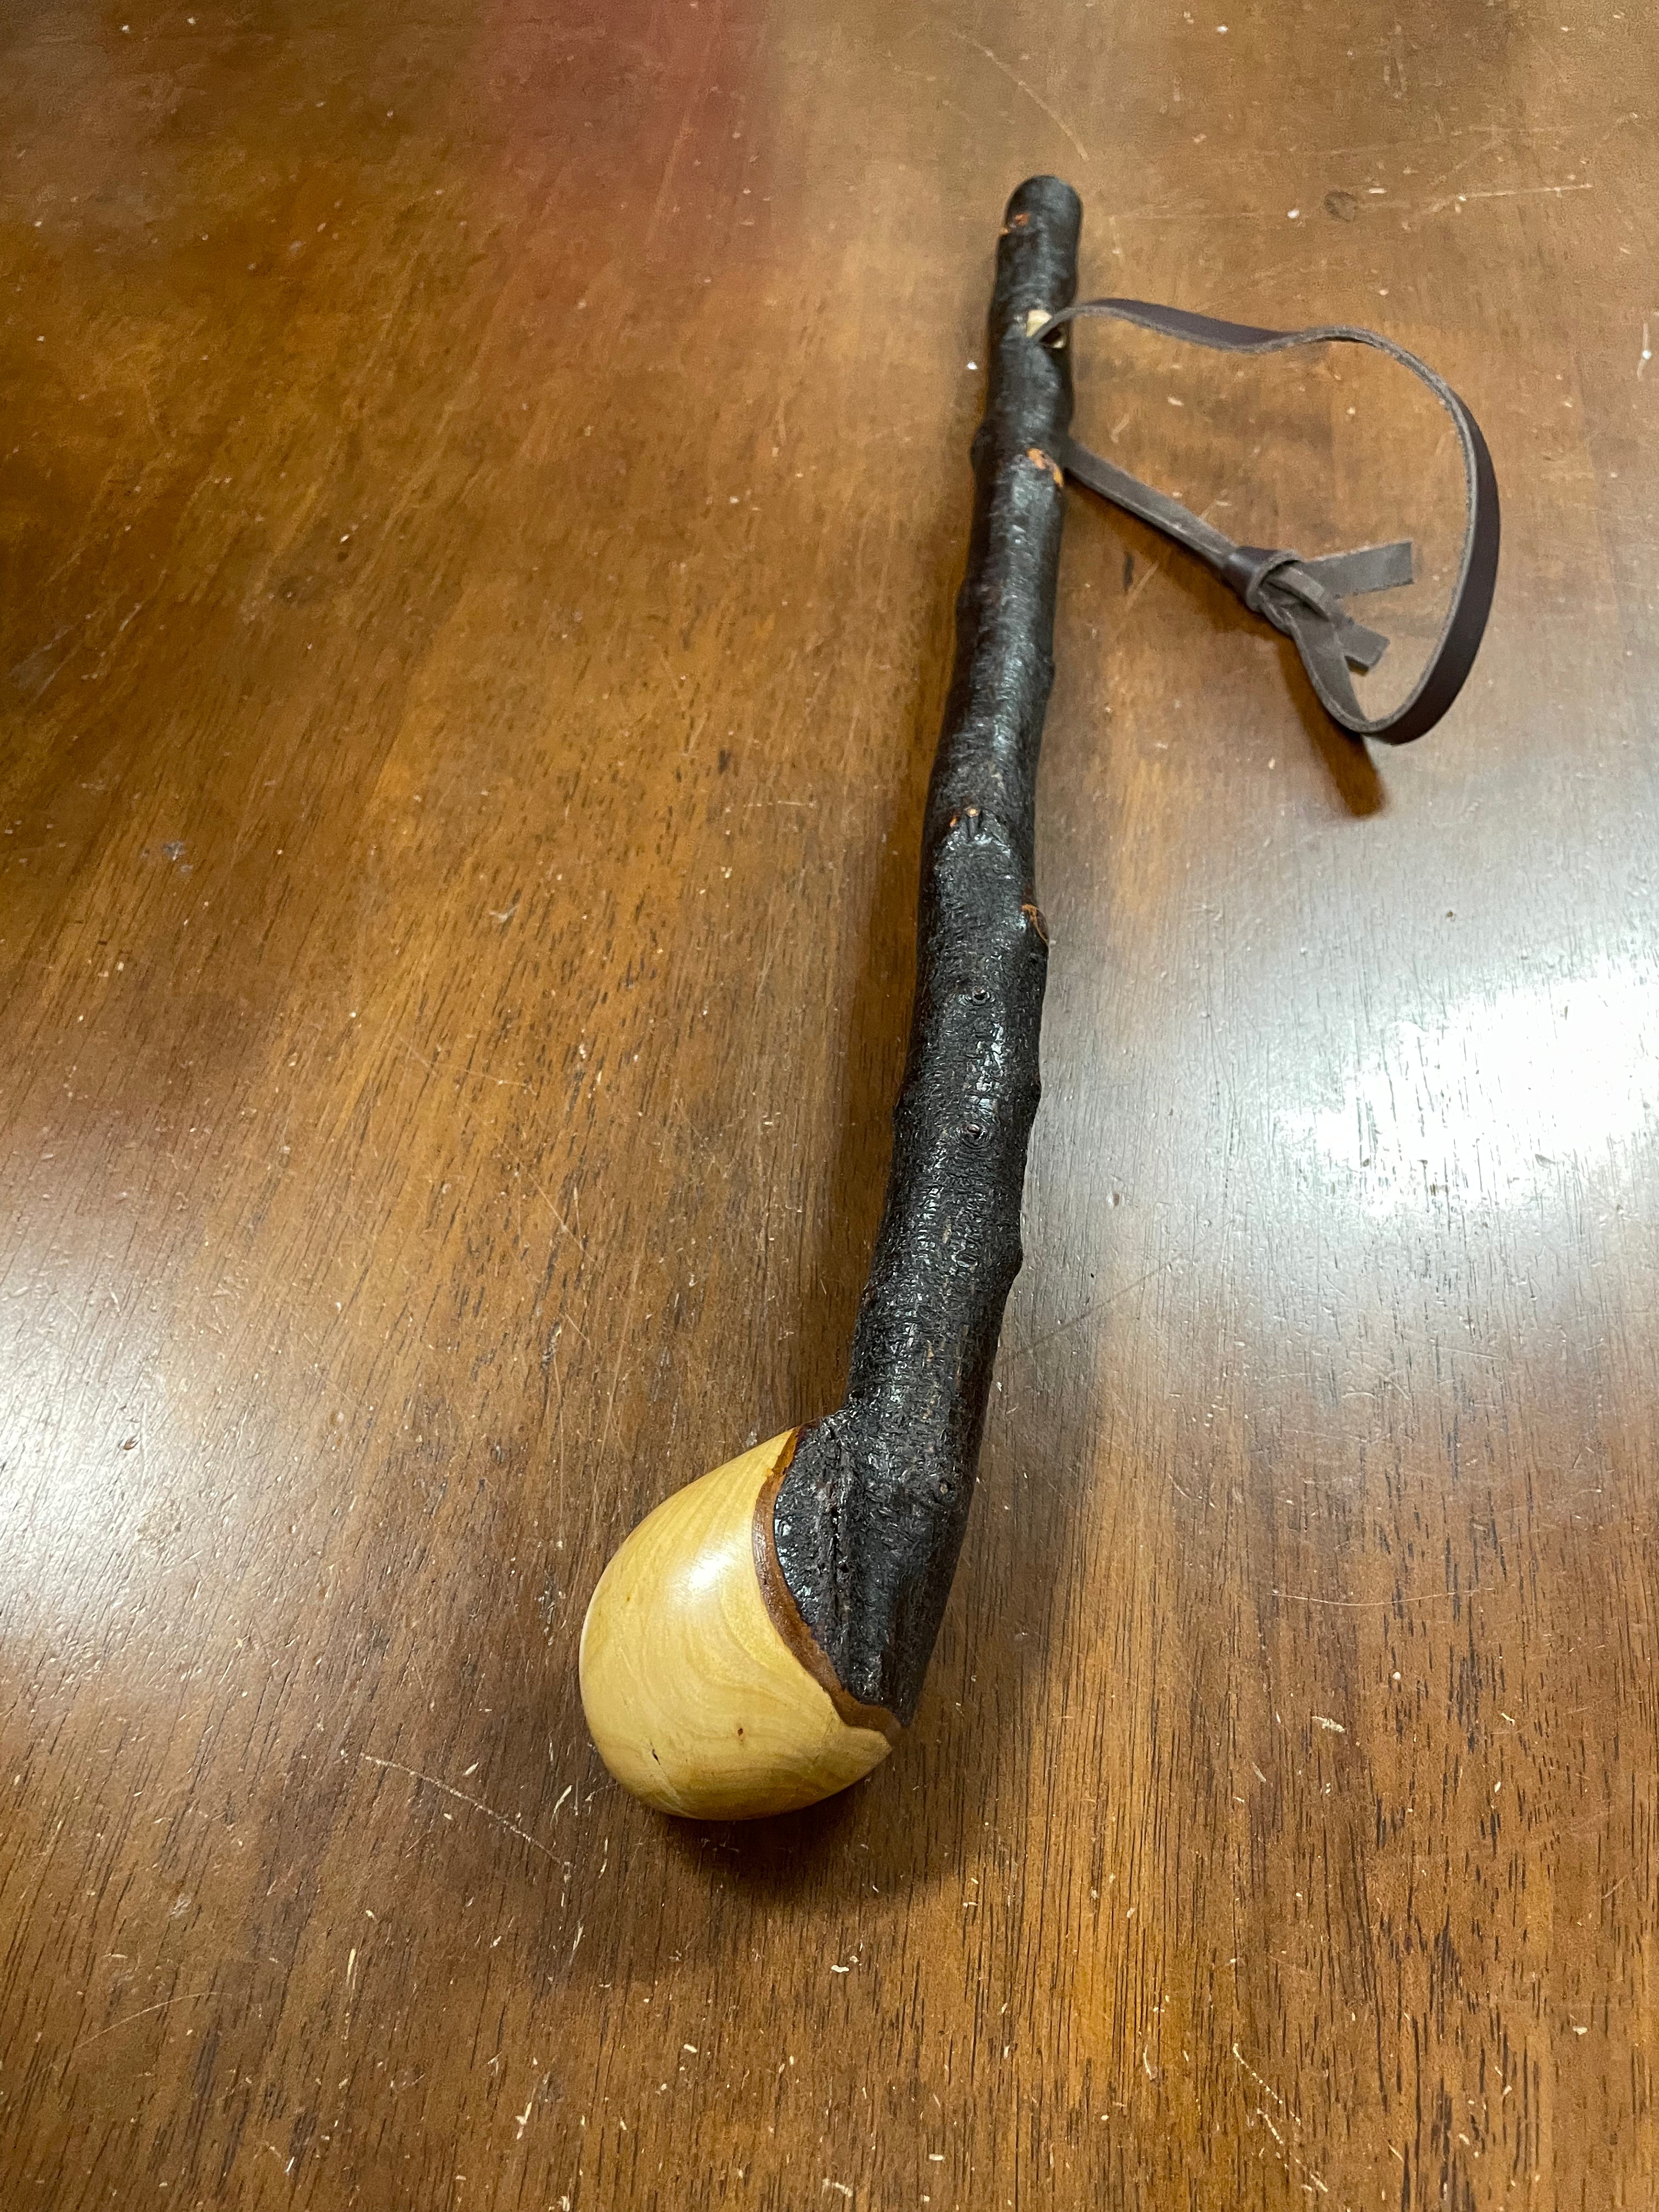 Blackthorn Shillelagh -18 1/2 inch - Handmade in Ireland